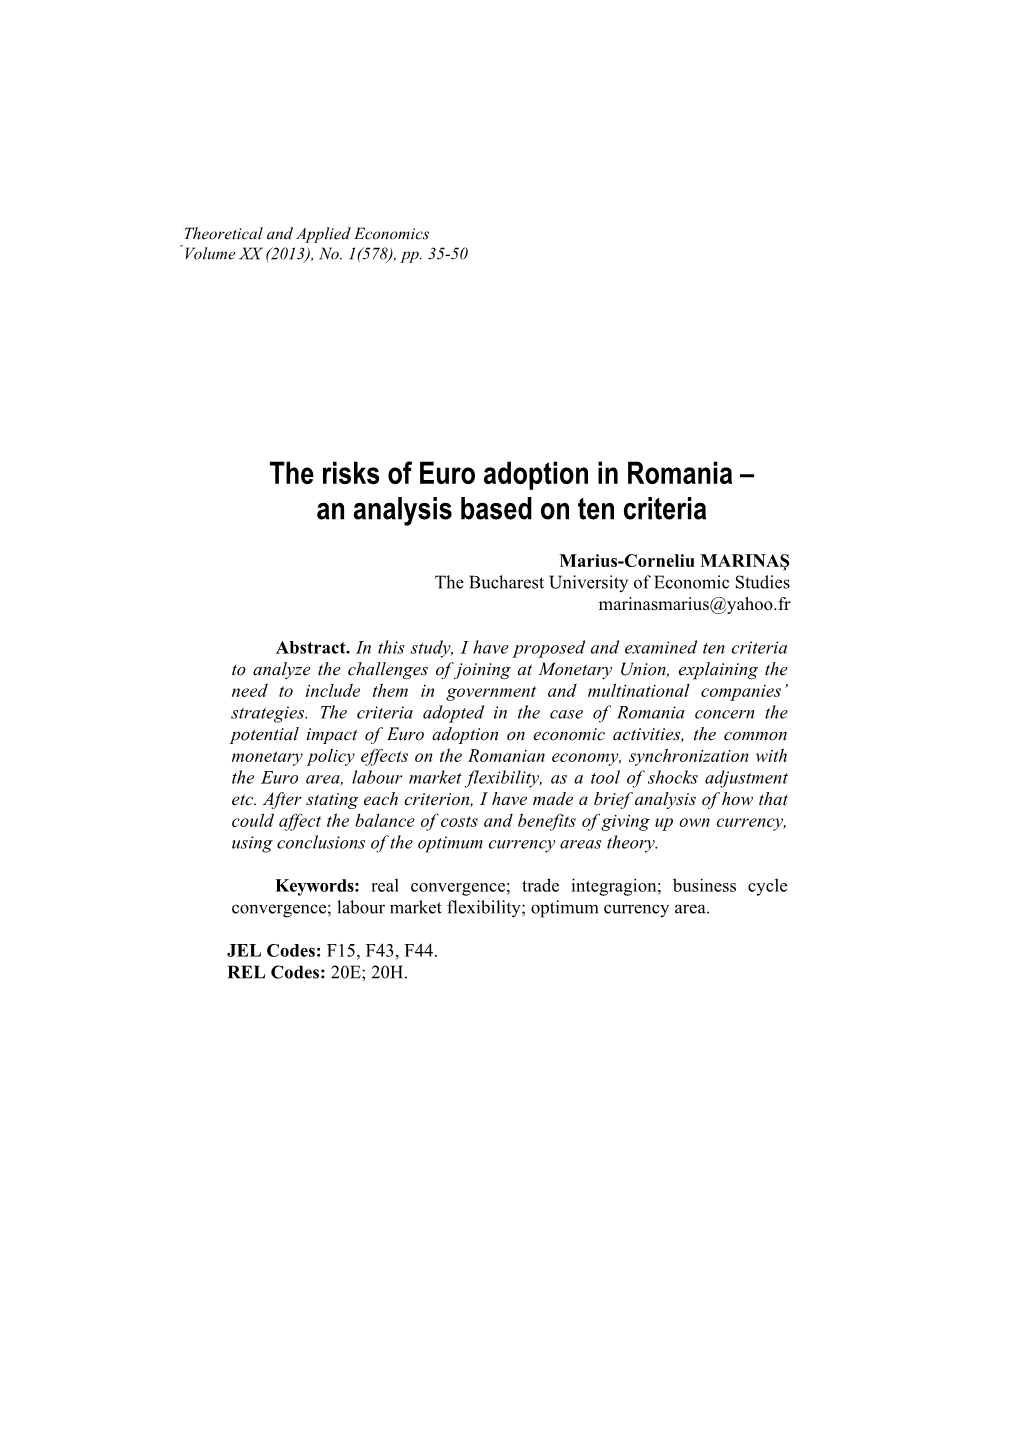 The Risks of Euro Adoption in Romania – an Analysis Based on Ten Criteria